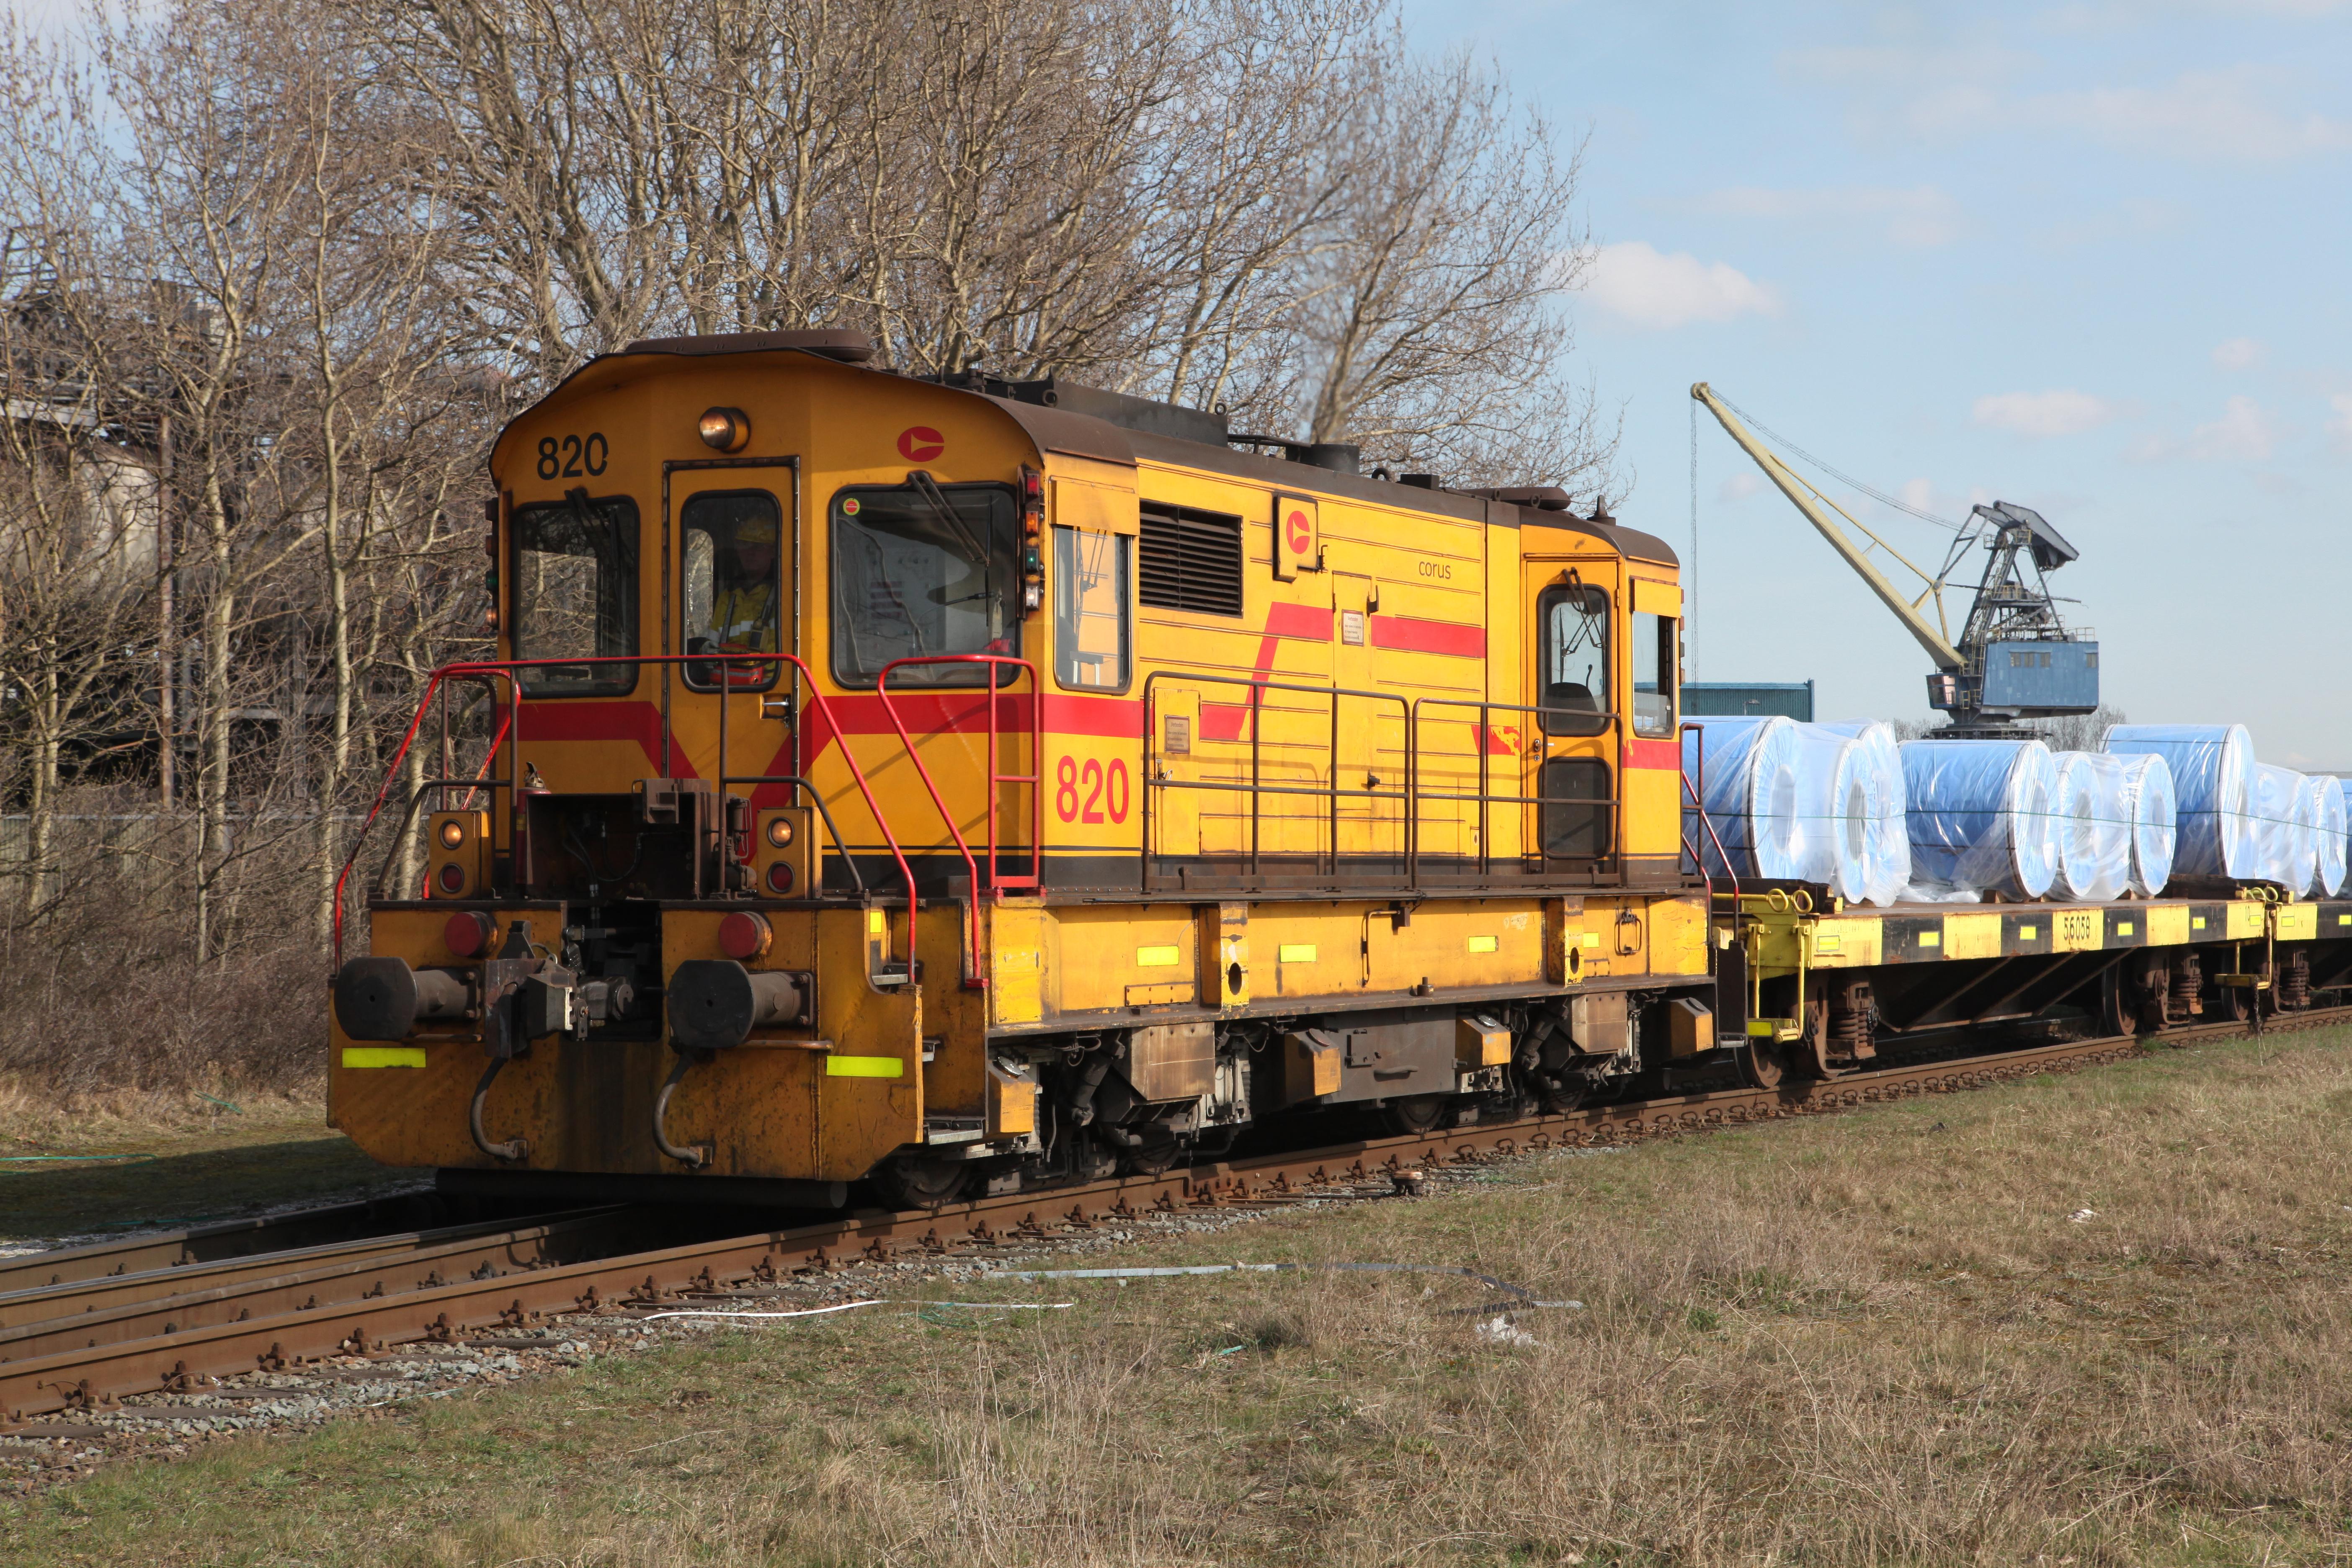 File:Corus trein 820 Tata Steel train.jpg - Wikimedia Commons